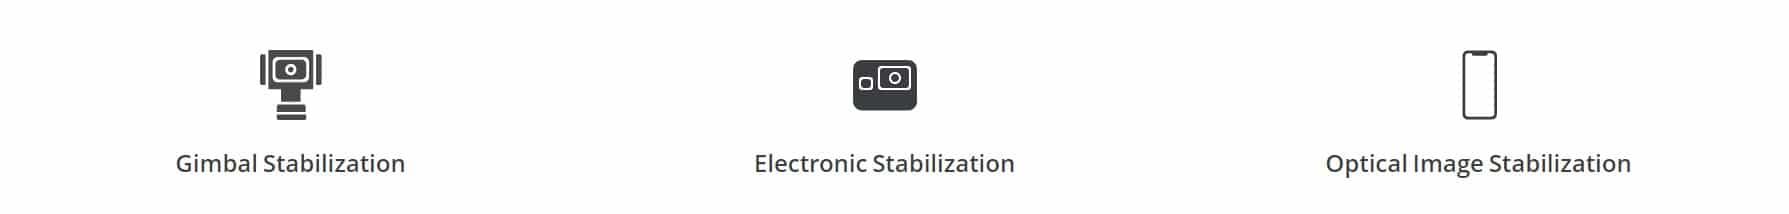 gimbal stabilization vs electronic vs optical image